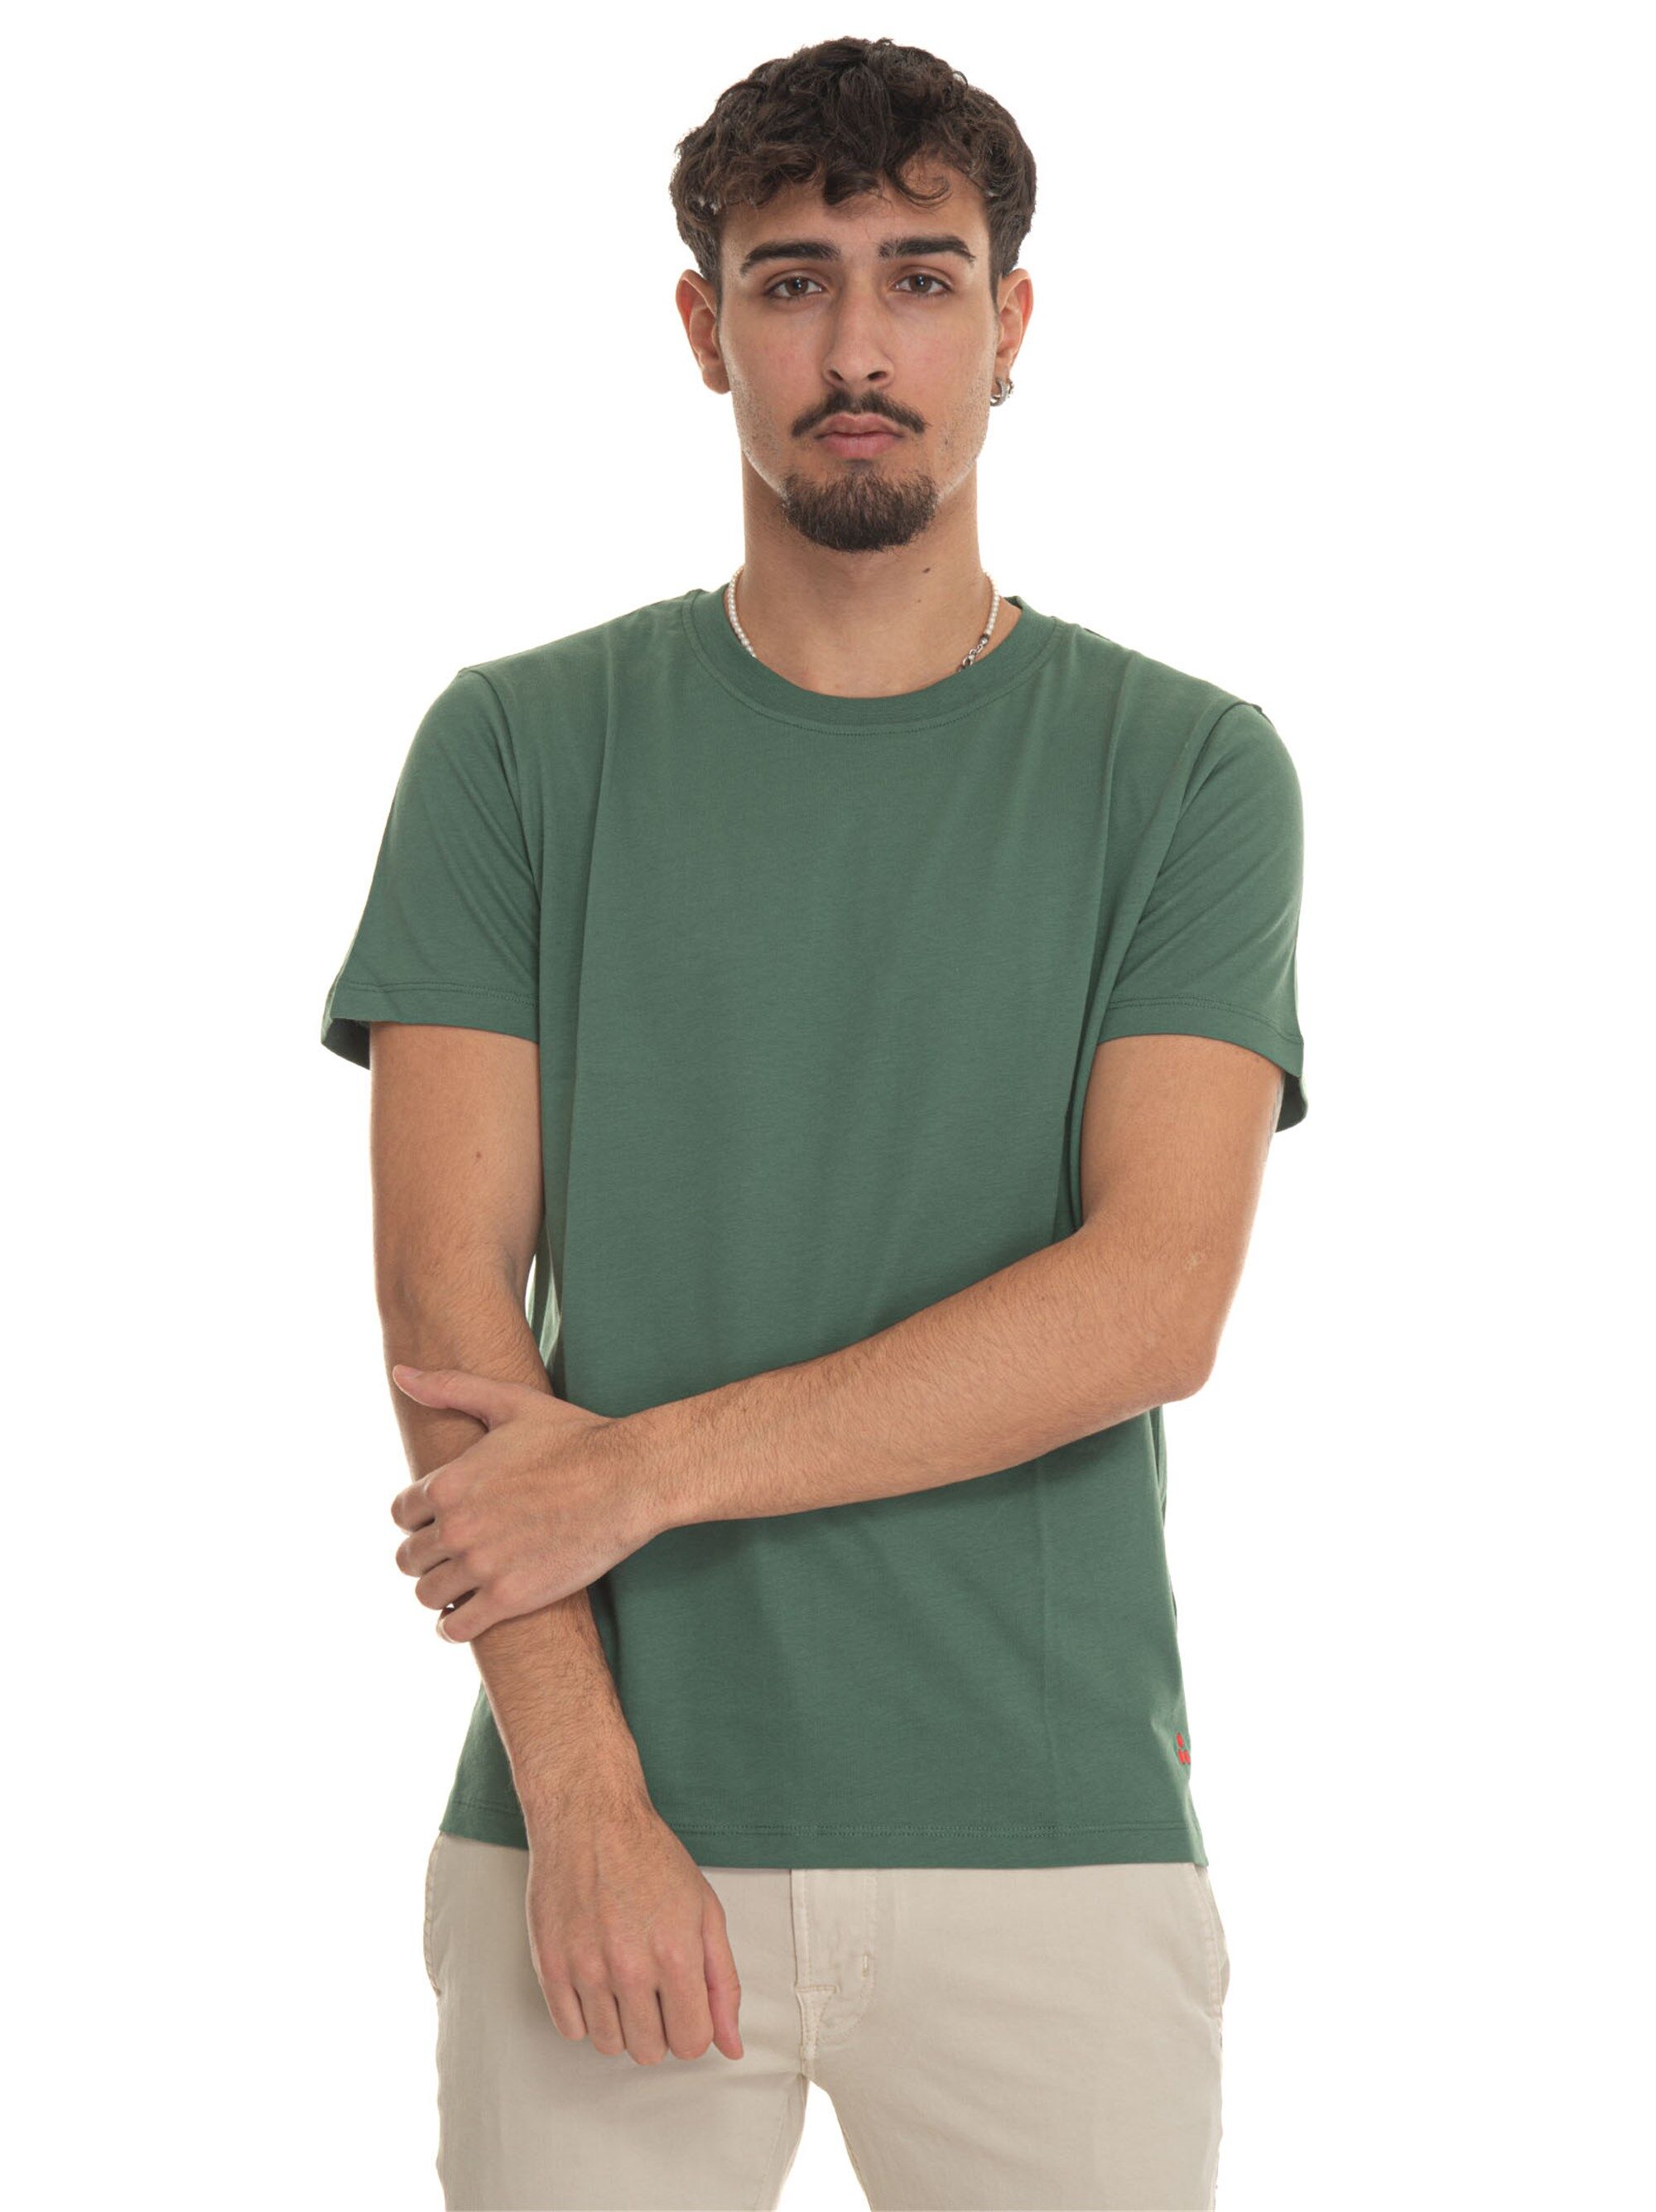 Peuterey T-shirt girocollo mezza manica MANDERLY01 Verde militare Uomo M